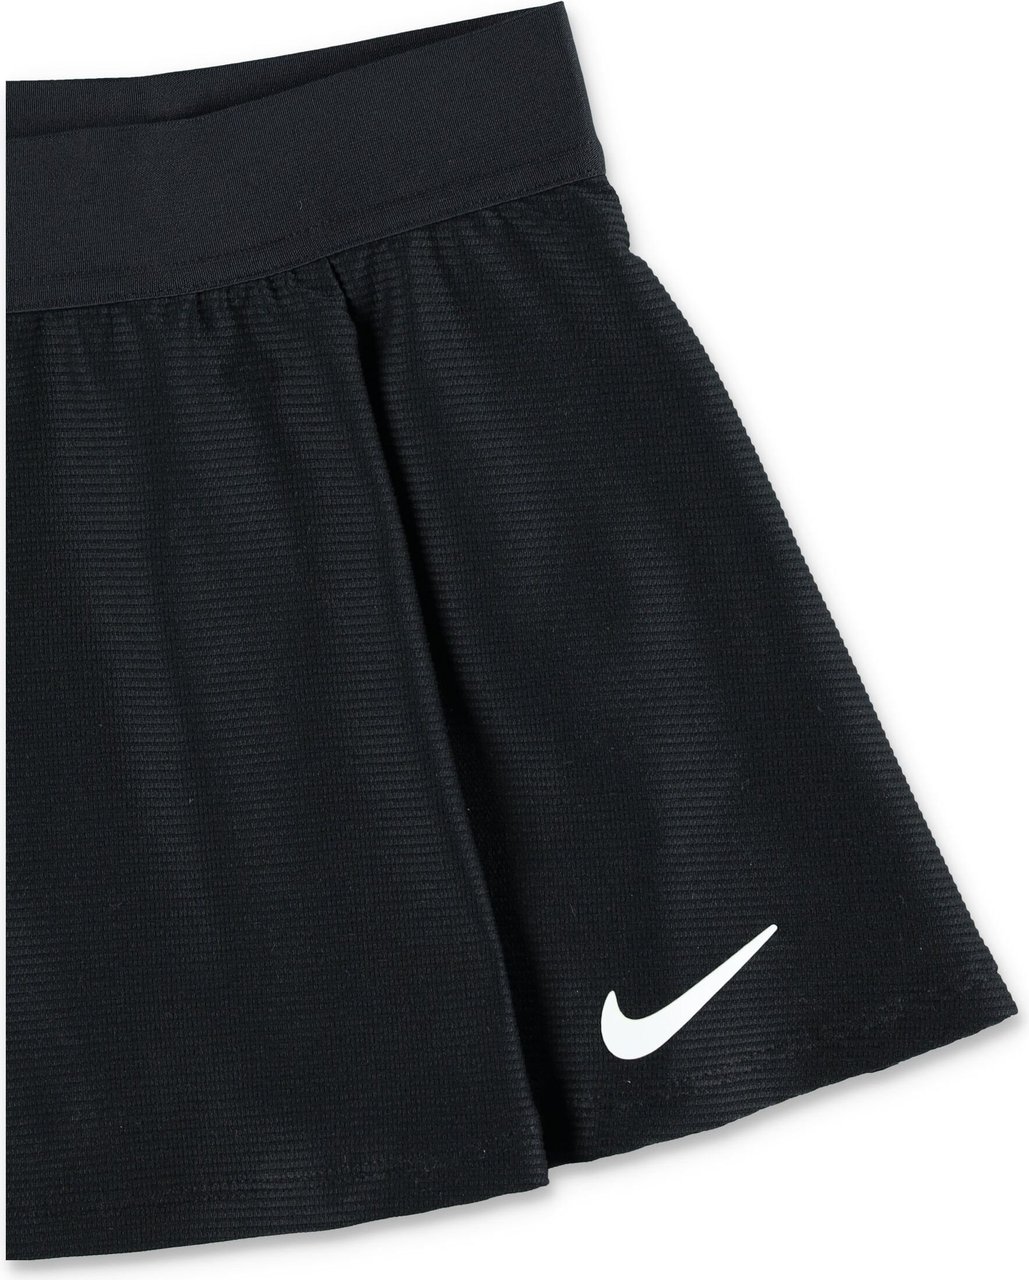 Nike TENNIS SKIRT Zwart